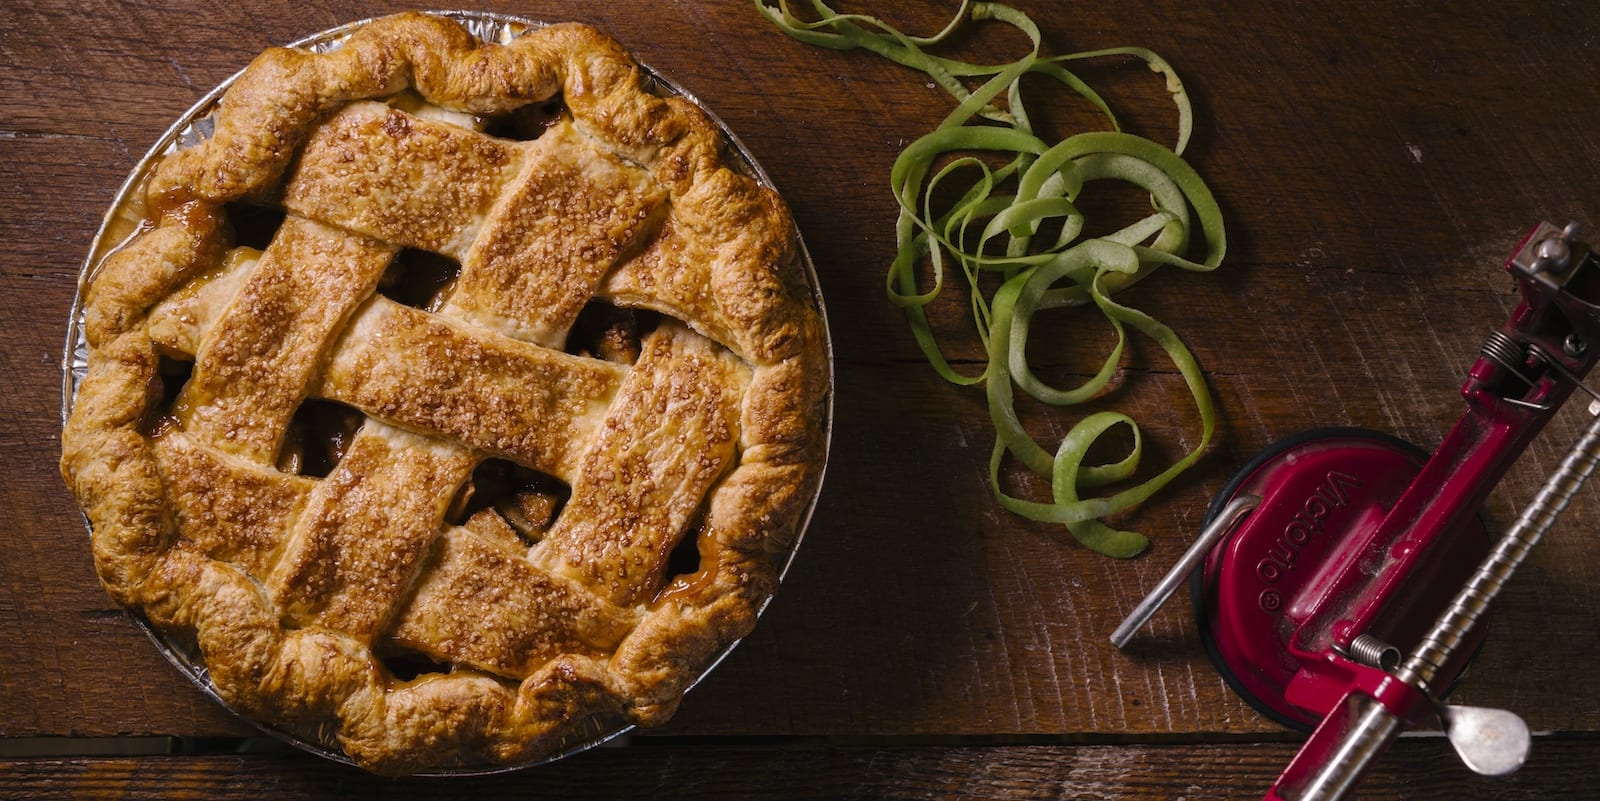 Apple pie with latticed crust